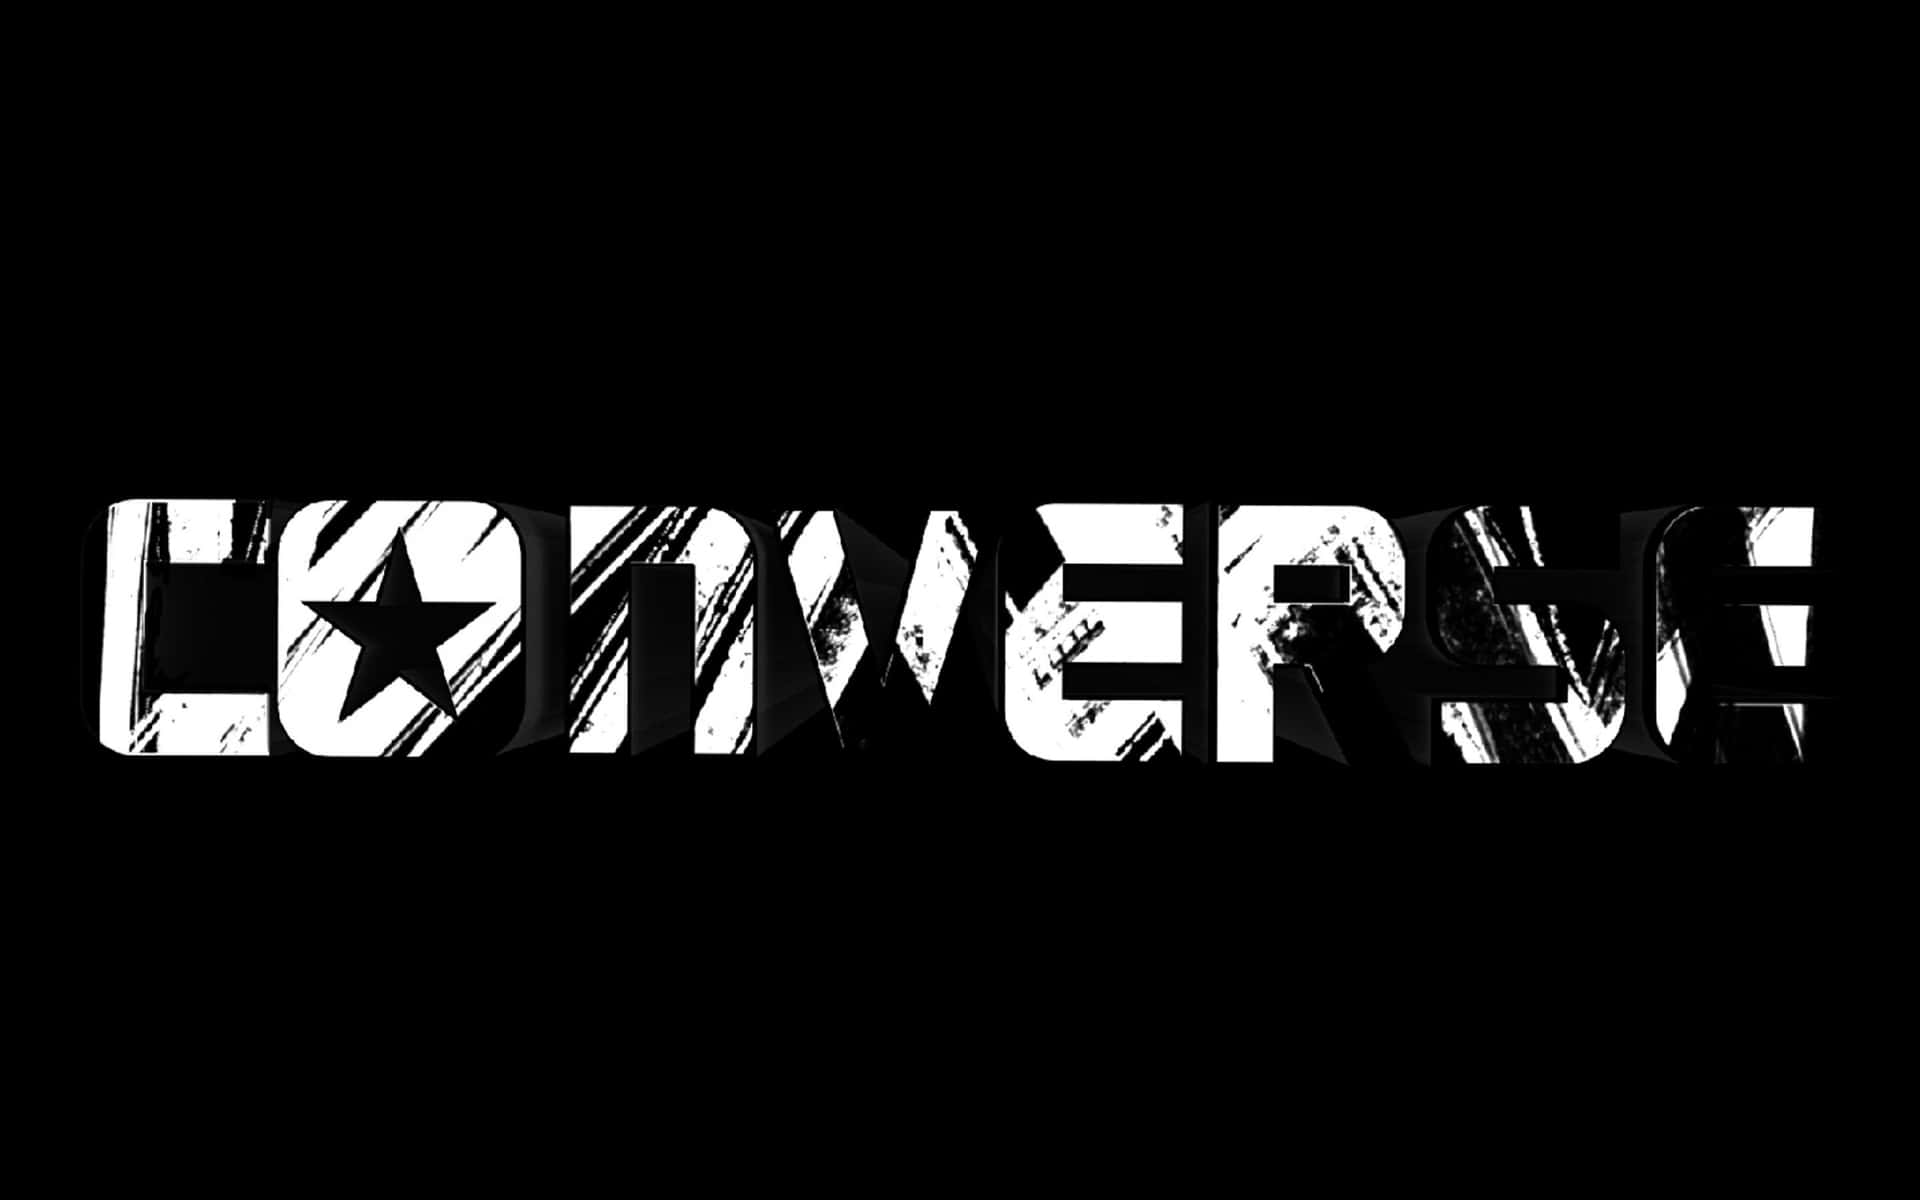 Bakgrundmed Converse-logotypen